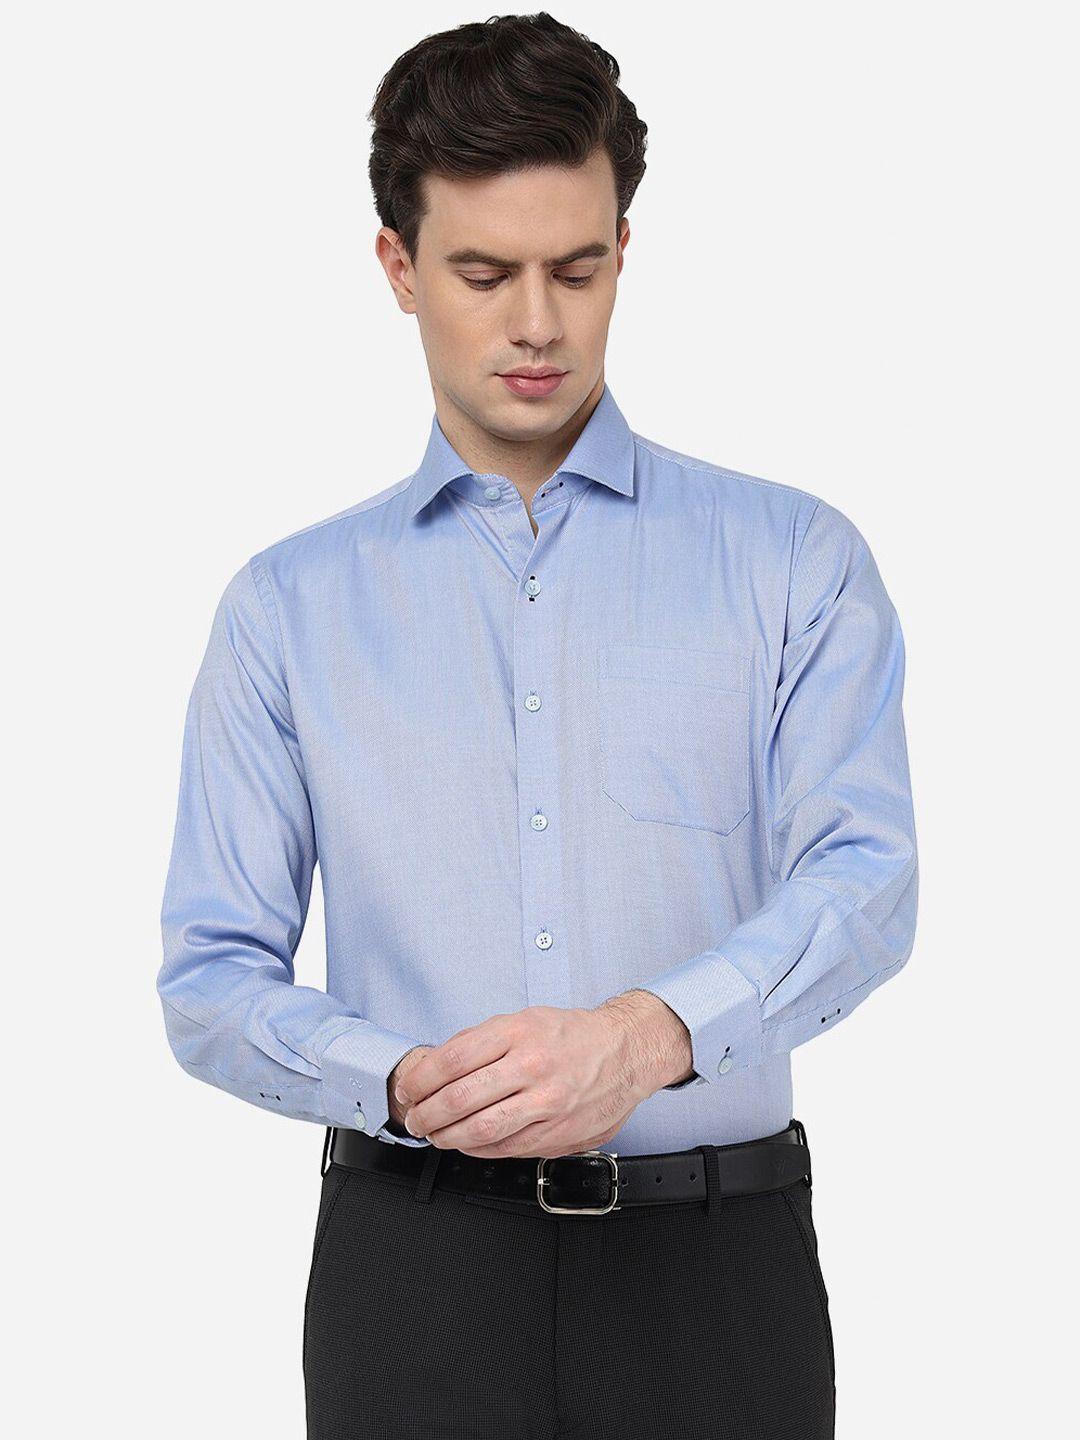 jade-blue-spread-collar-long-sleeve-opaque-regular-fit-formal-shirt